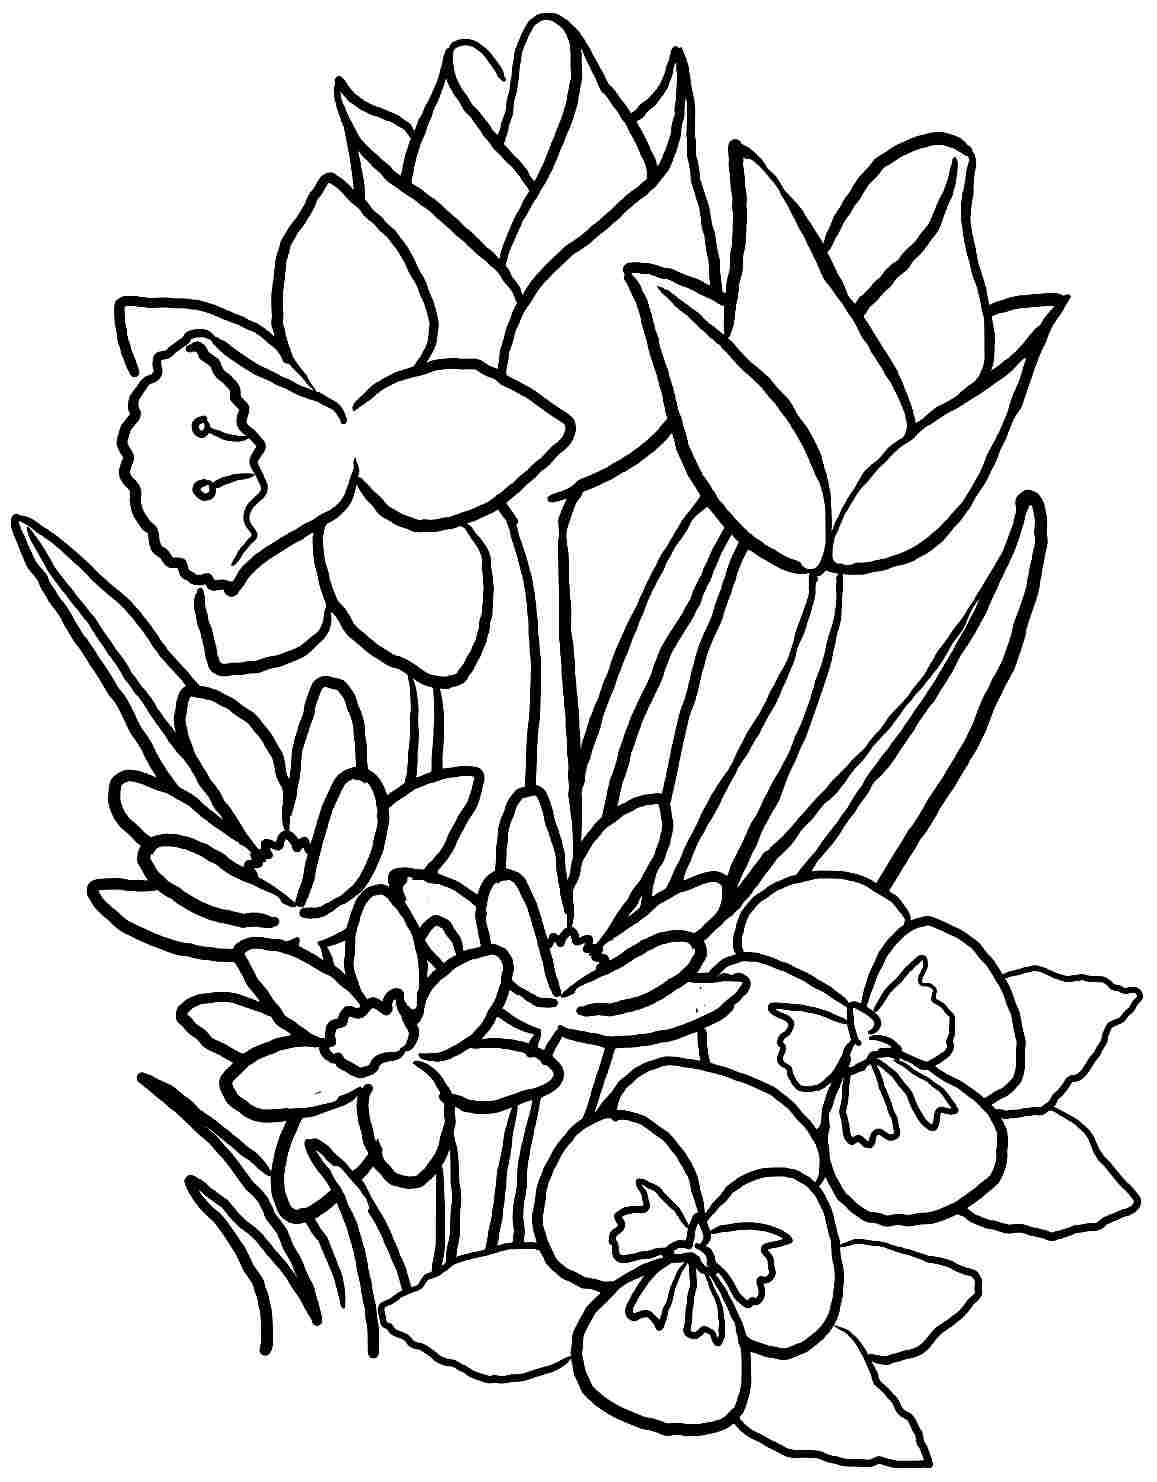 Раскраски цветы для взрослых. Раскраска 5